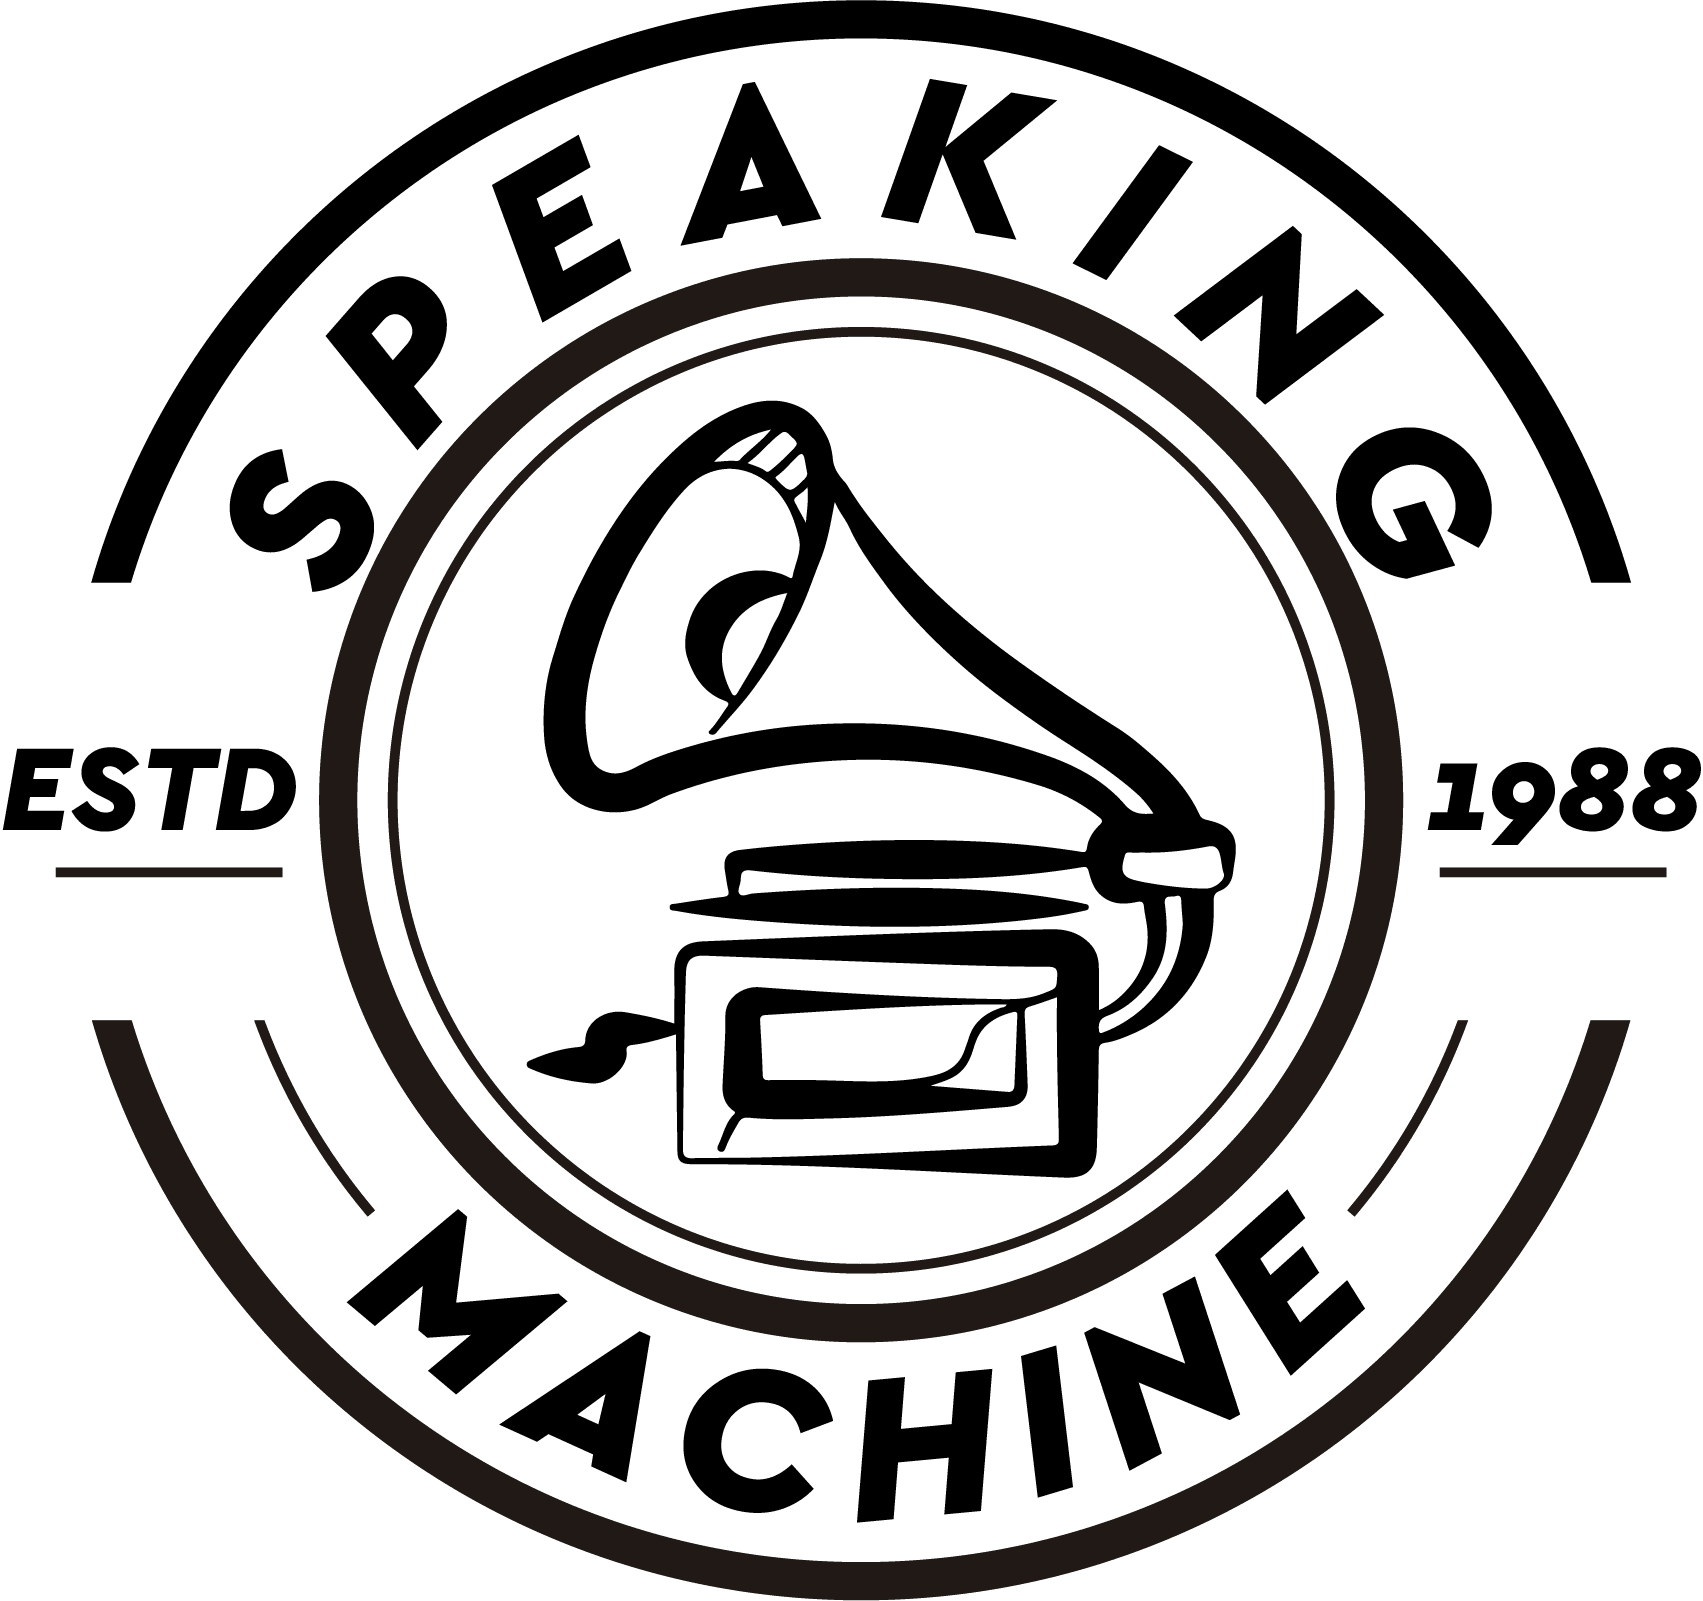 Speaking Machine Toastmasters